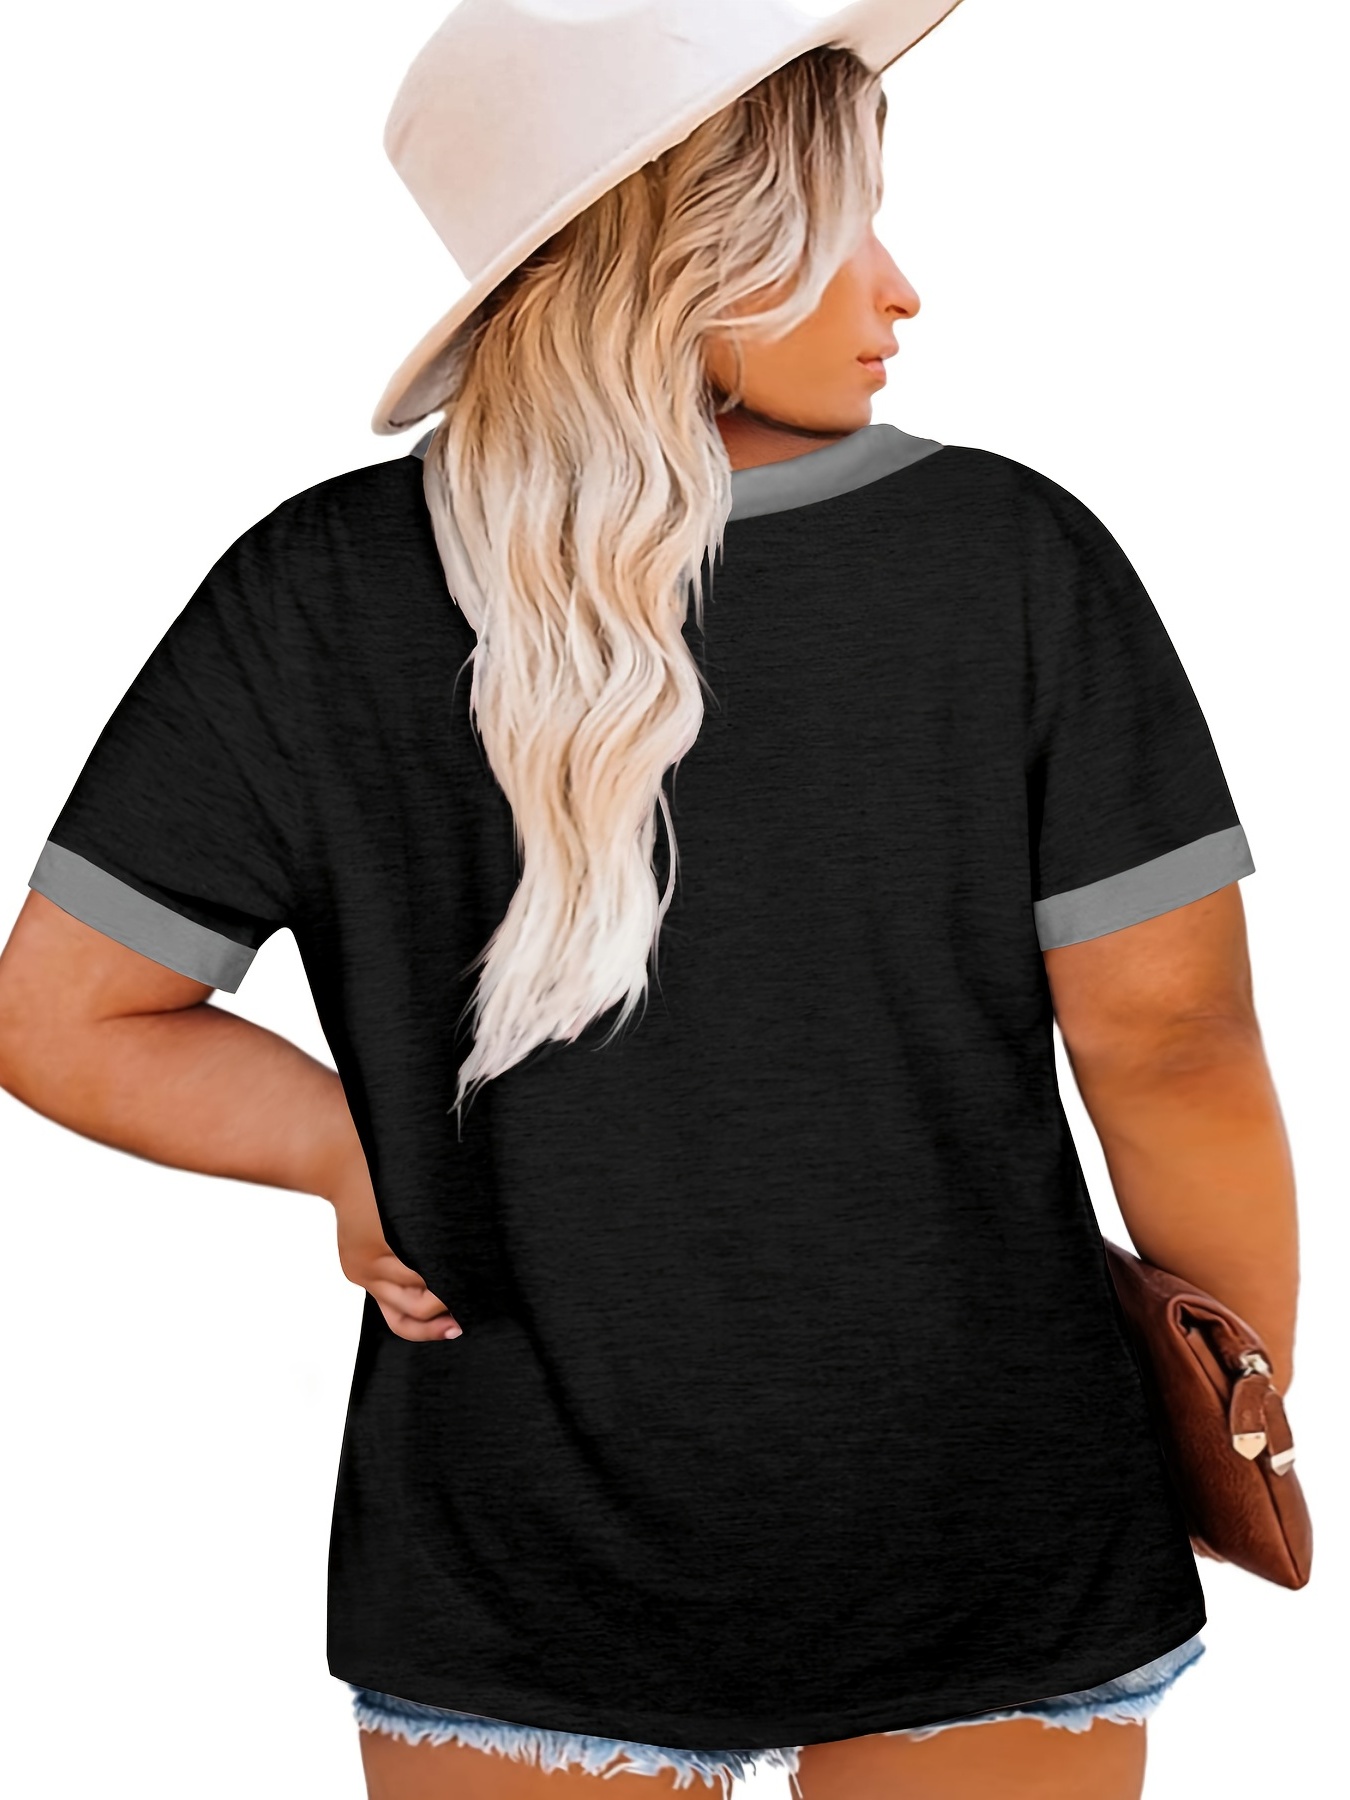 Camiseta básica mujer color negro